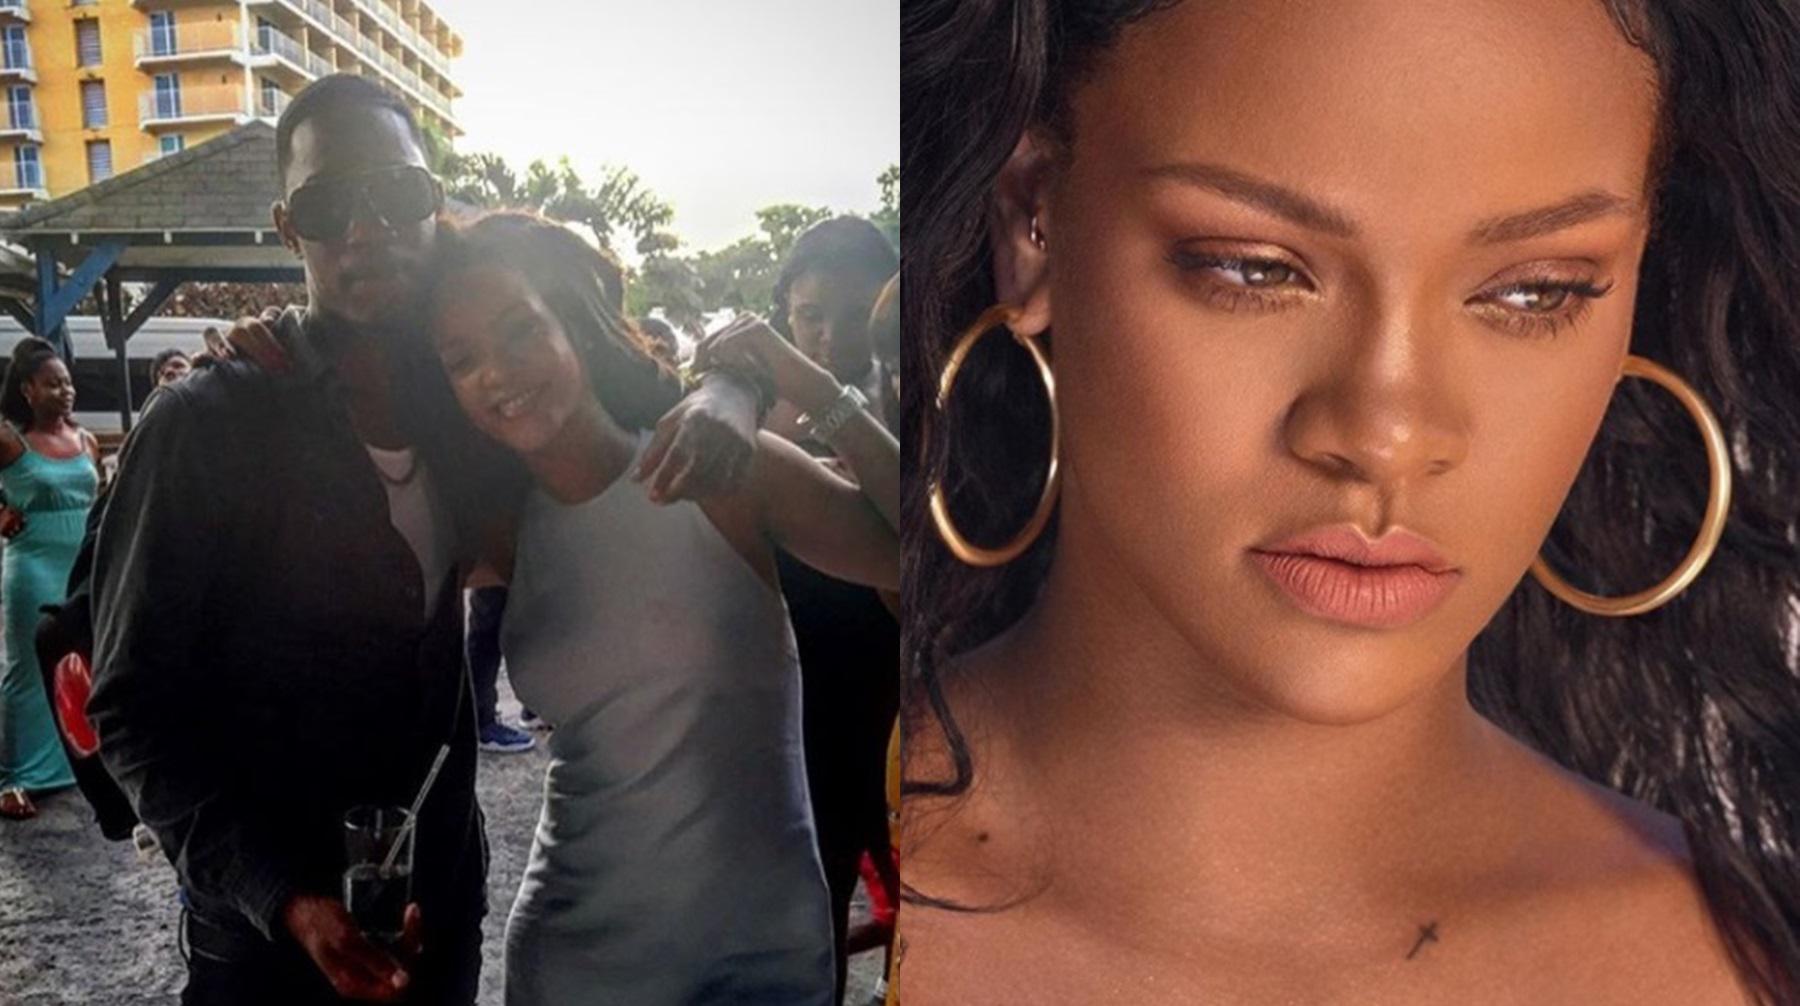 Matan a tiros al primo de Rihanna, un día después de Navidad